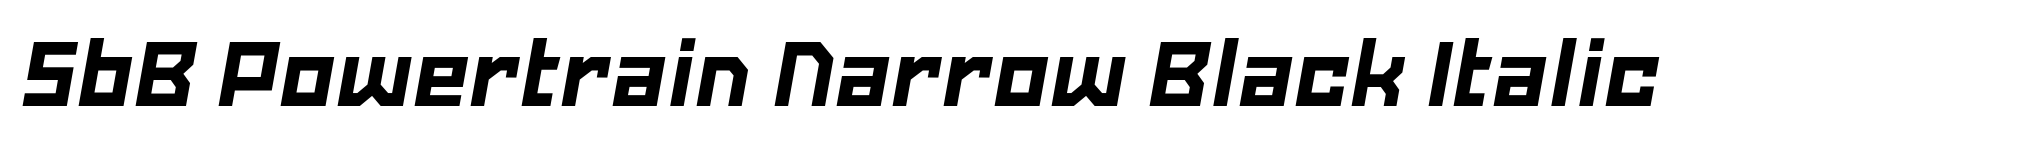 SbB Powertrain Narrow Black Italic image